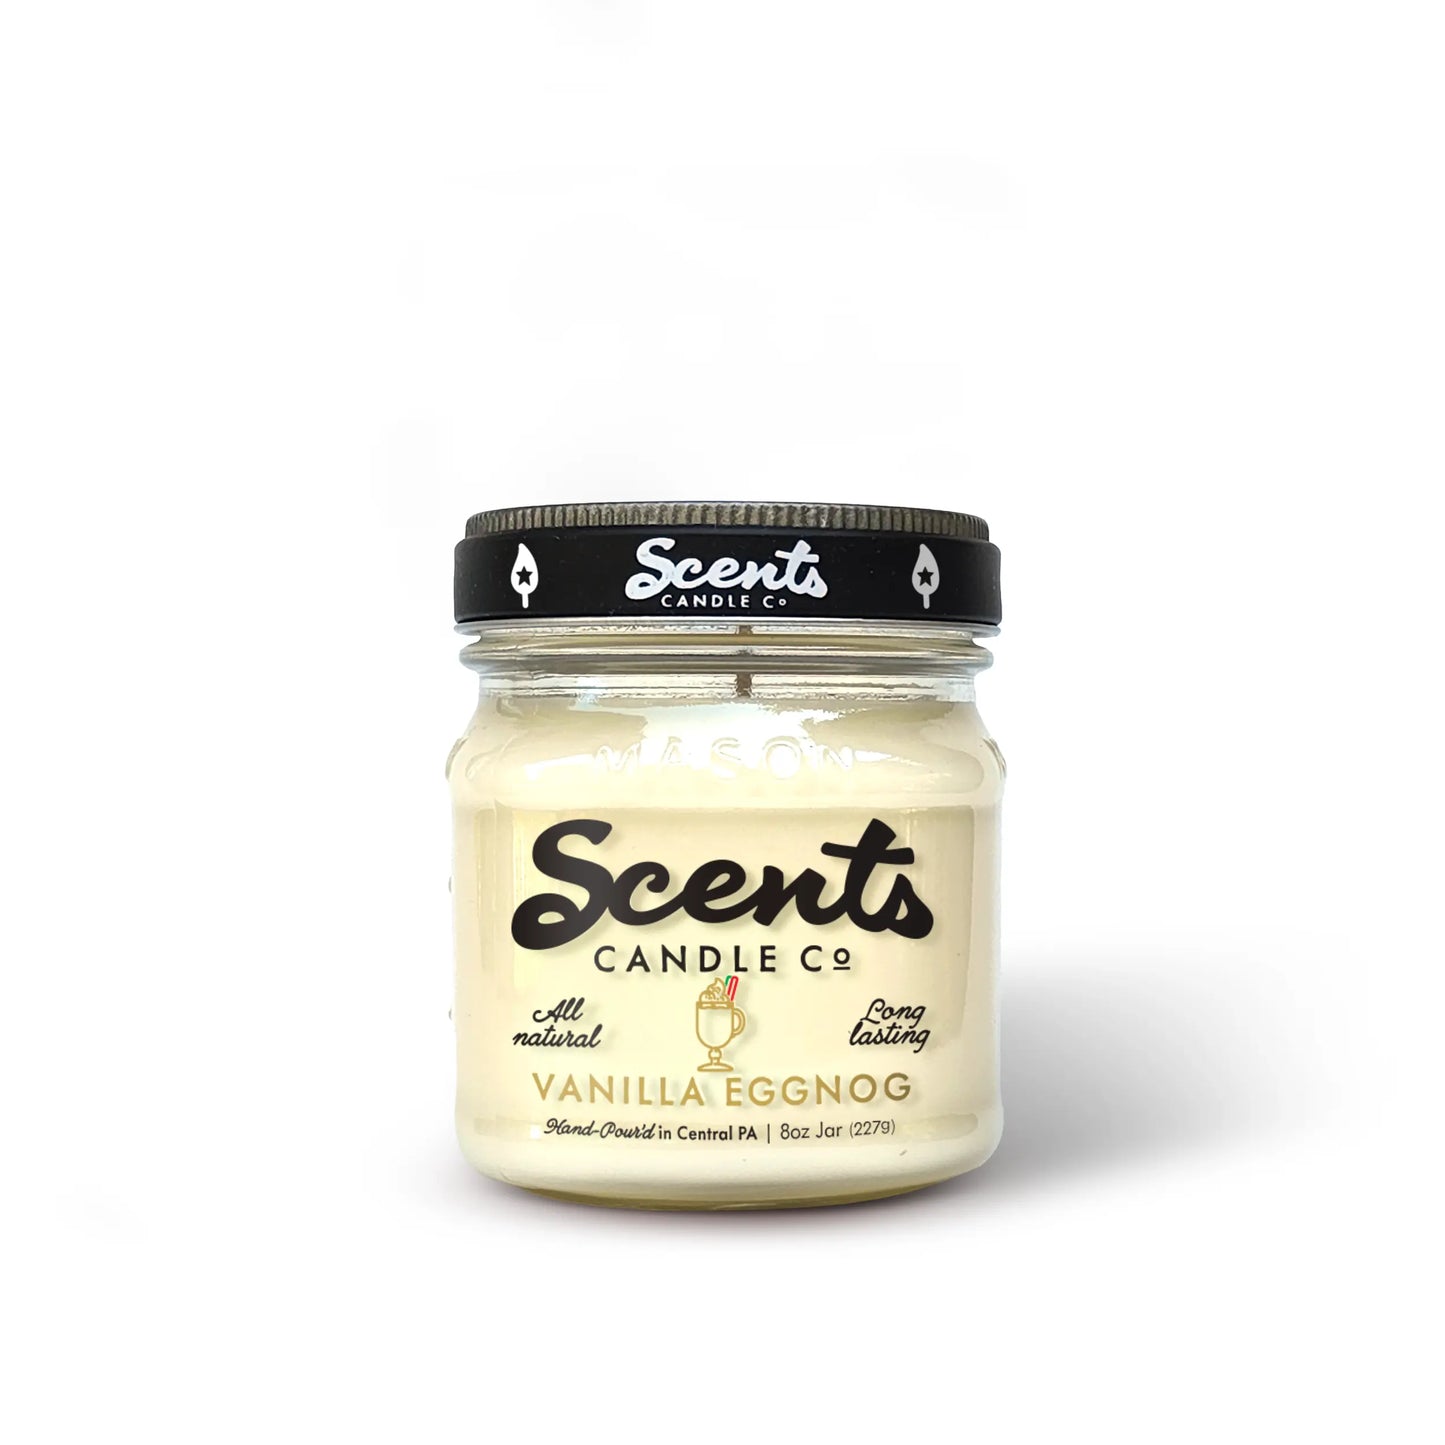 Scents Candle Co. Vanilla Eggnog Soy Wax Candles